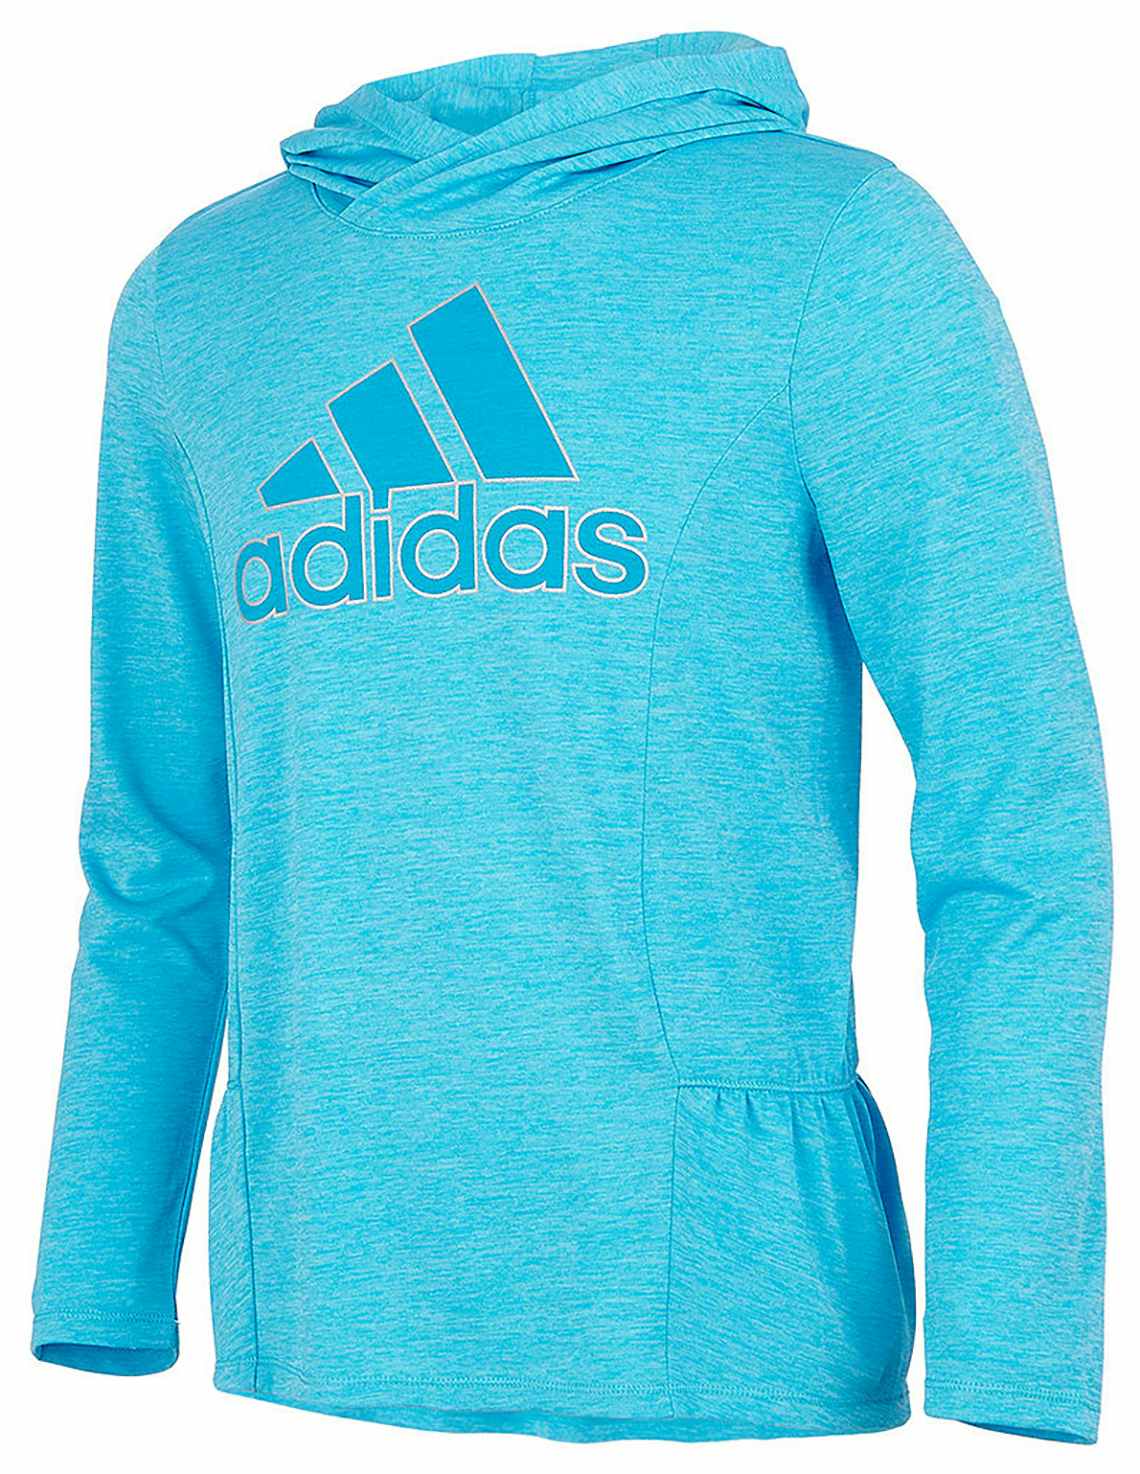 Aqua Adidas hoodie